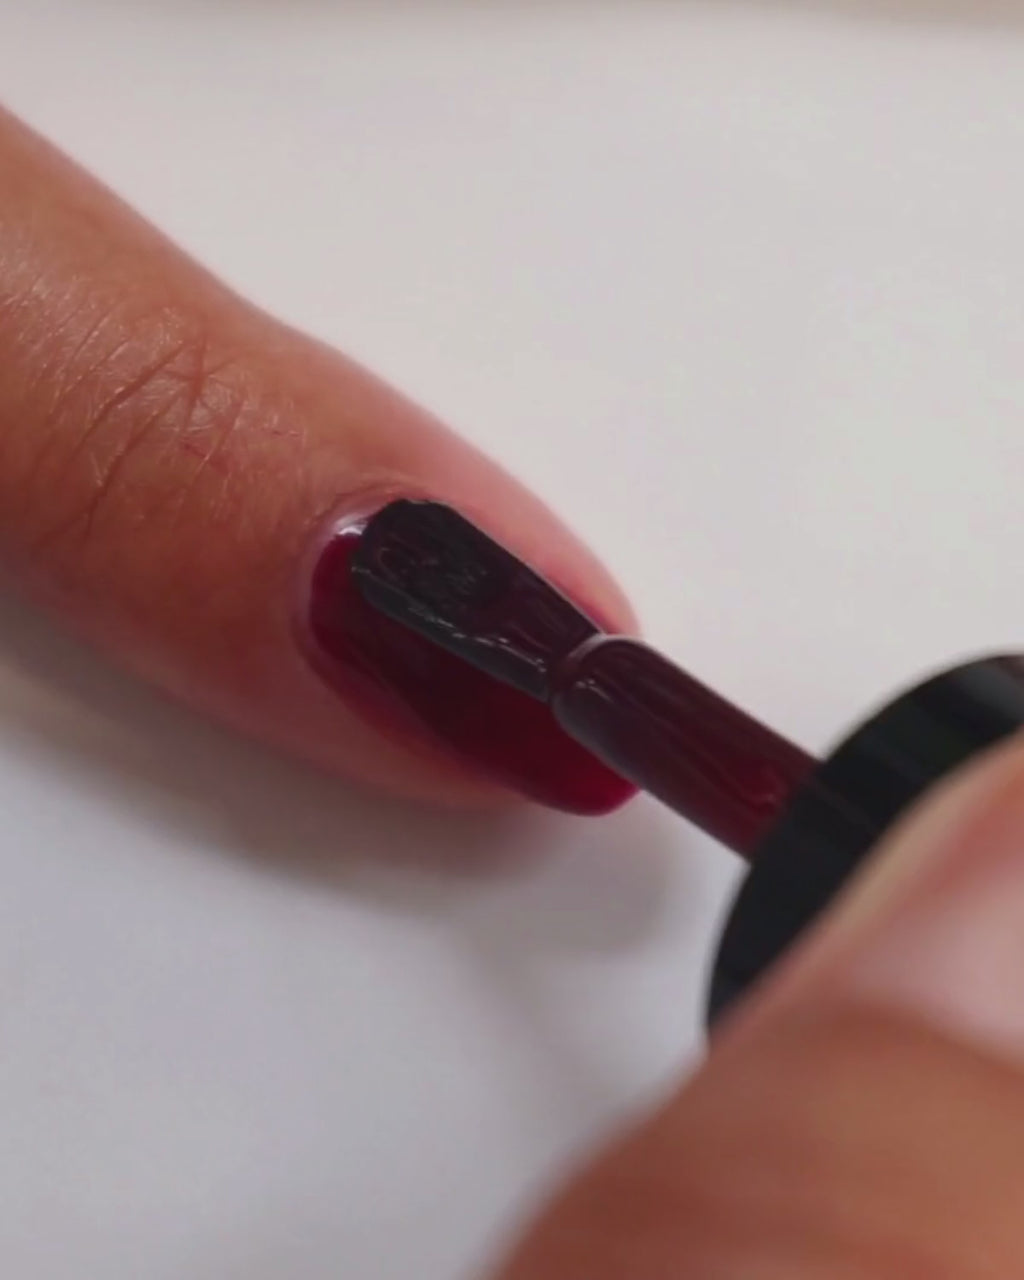 90s inspired burgundy nail polish